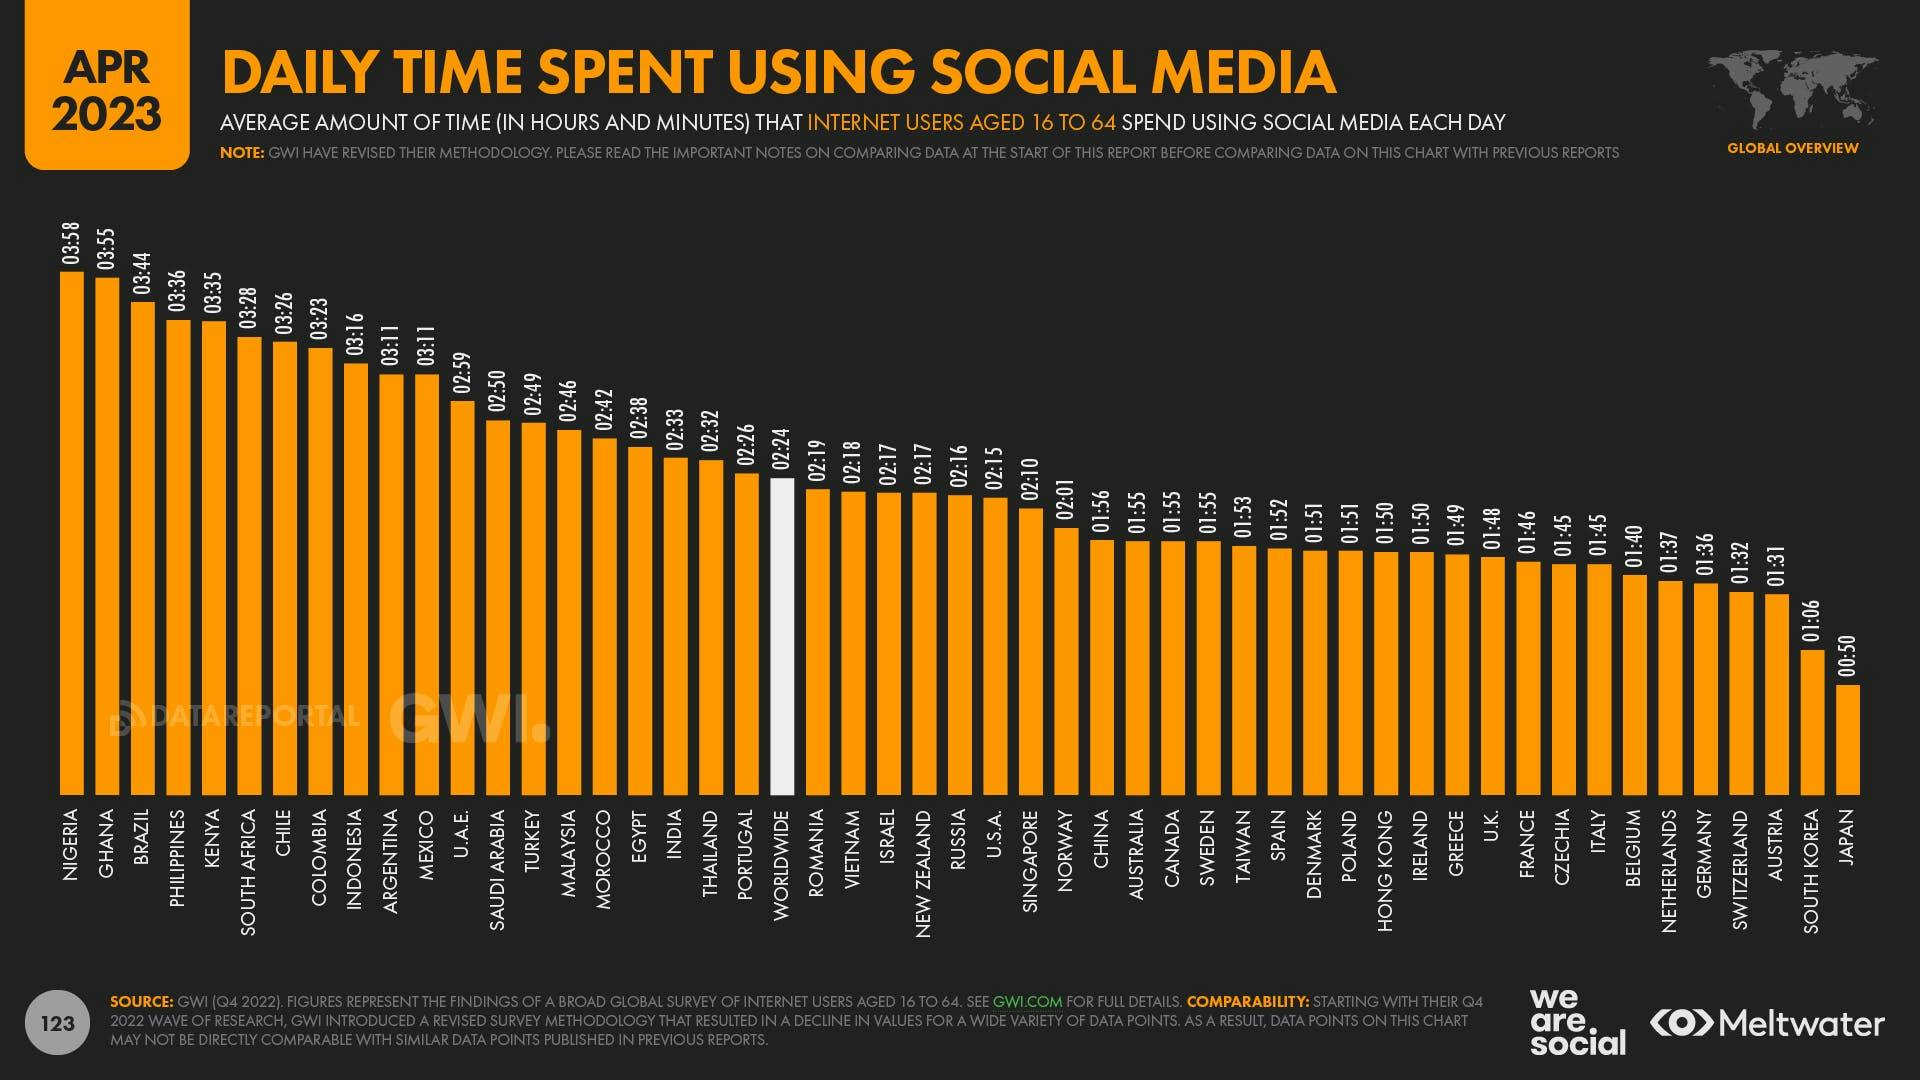 April 2023 Global State of Digital Report: Daily Time Spent Using Social Media